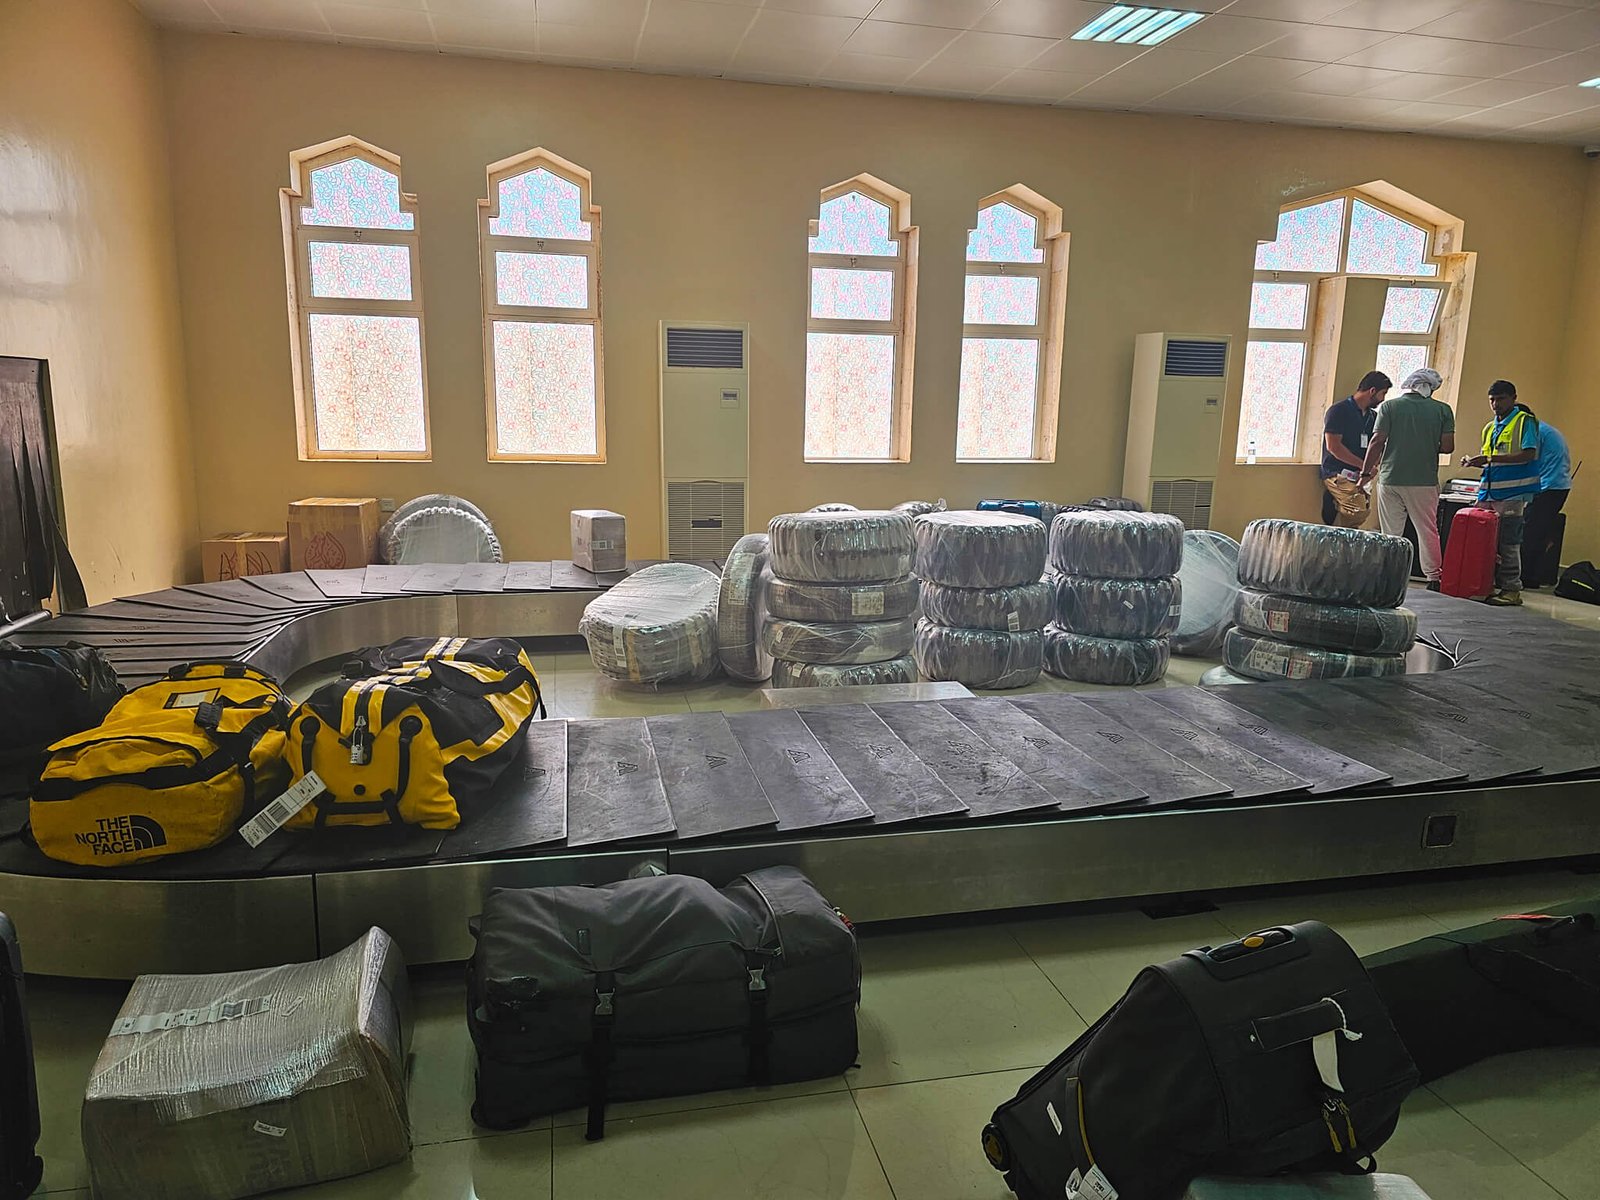 Socotra island airport luggage belt